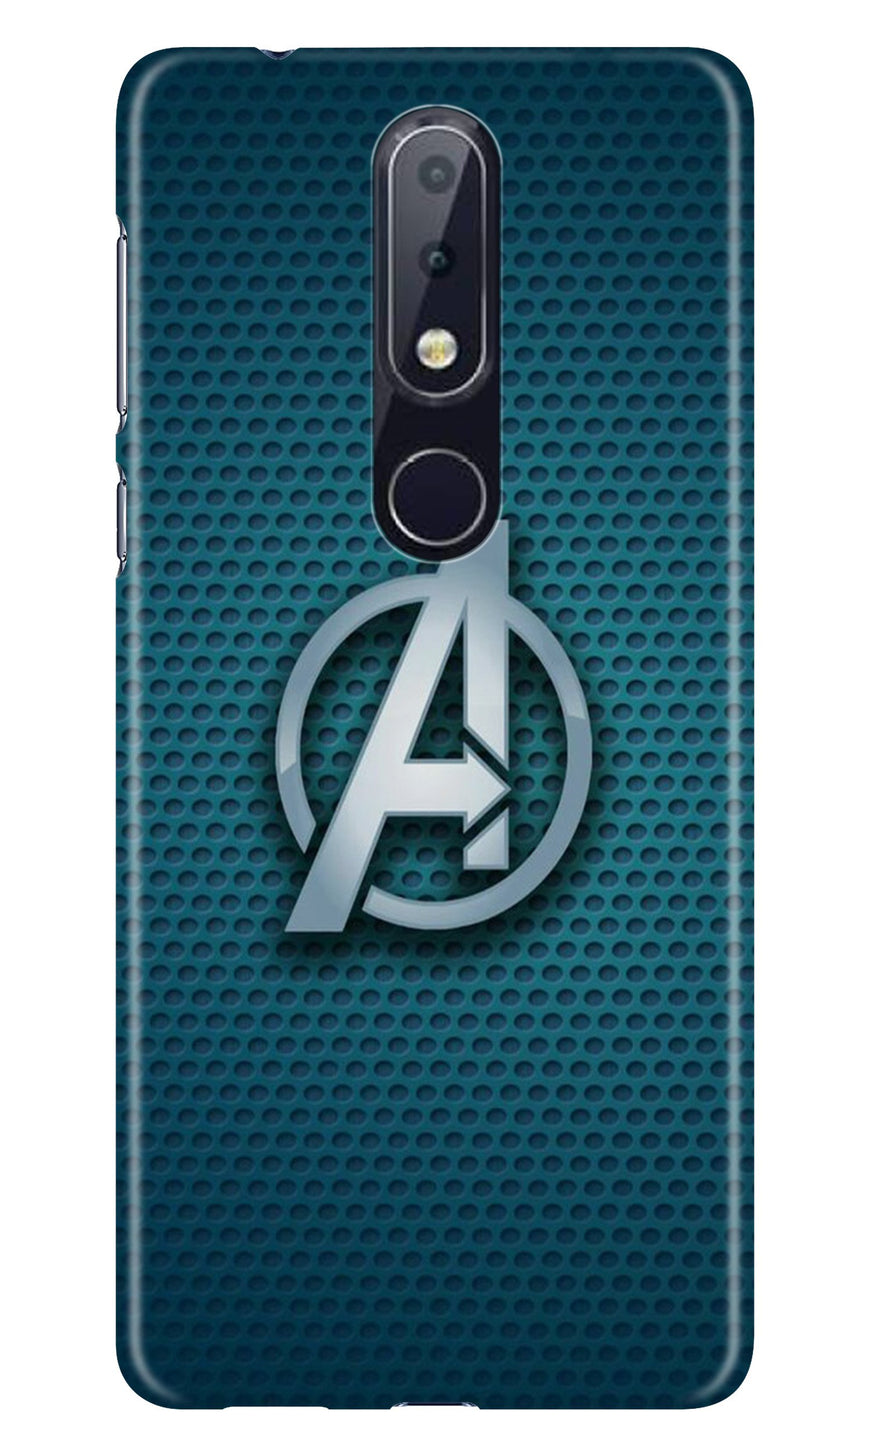 Avengers Case for Nokia 4.2 (Design No. 246)